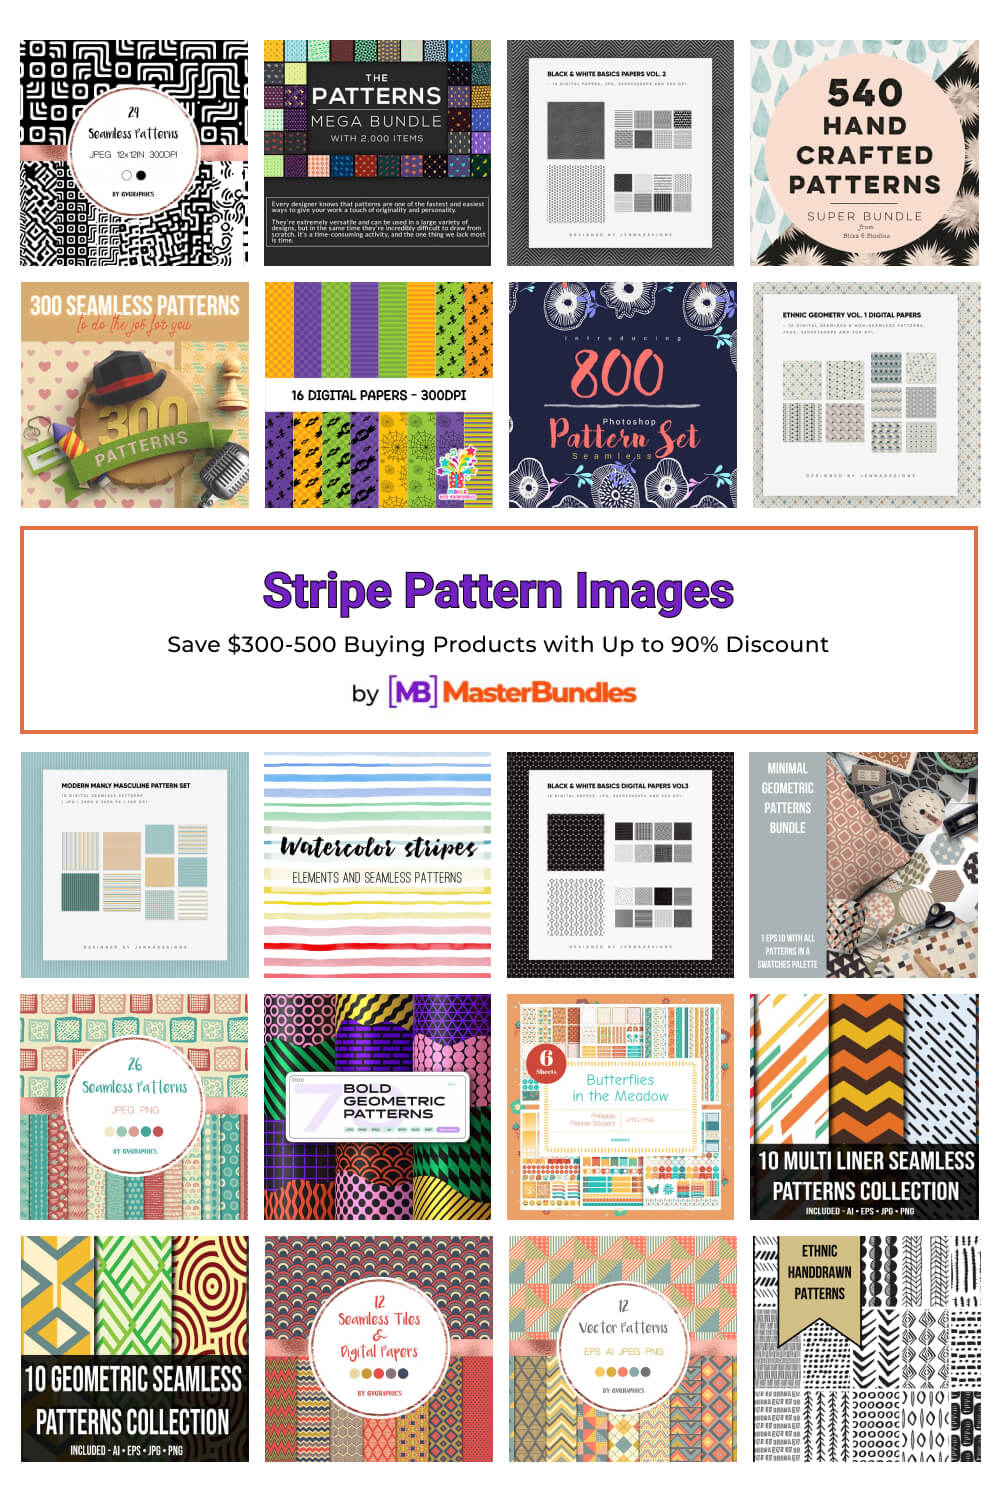 stripe pattern images pinterest image.